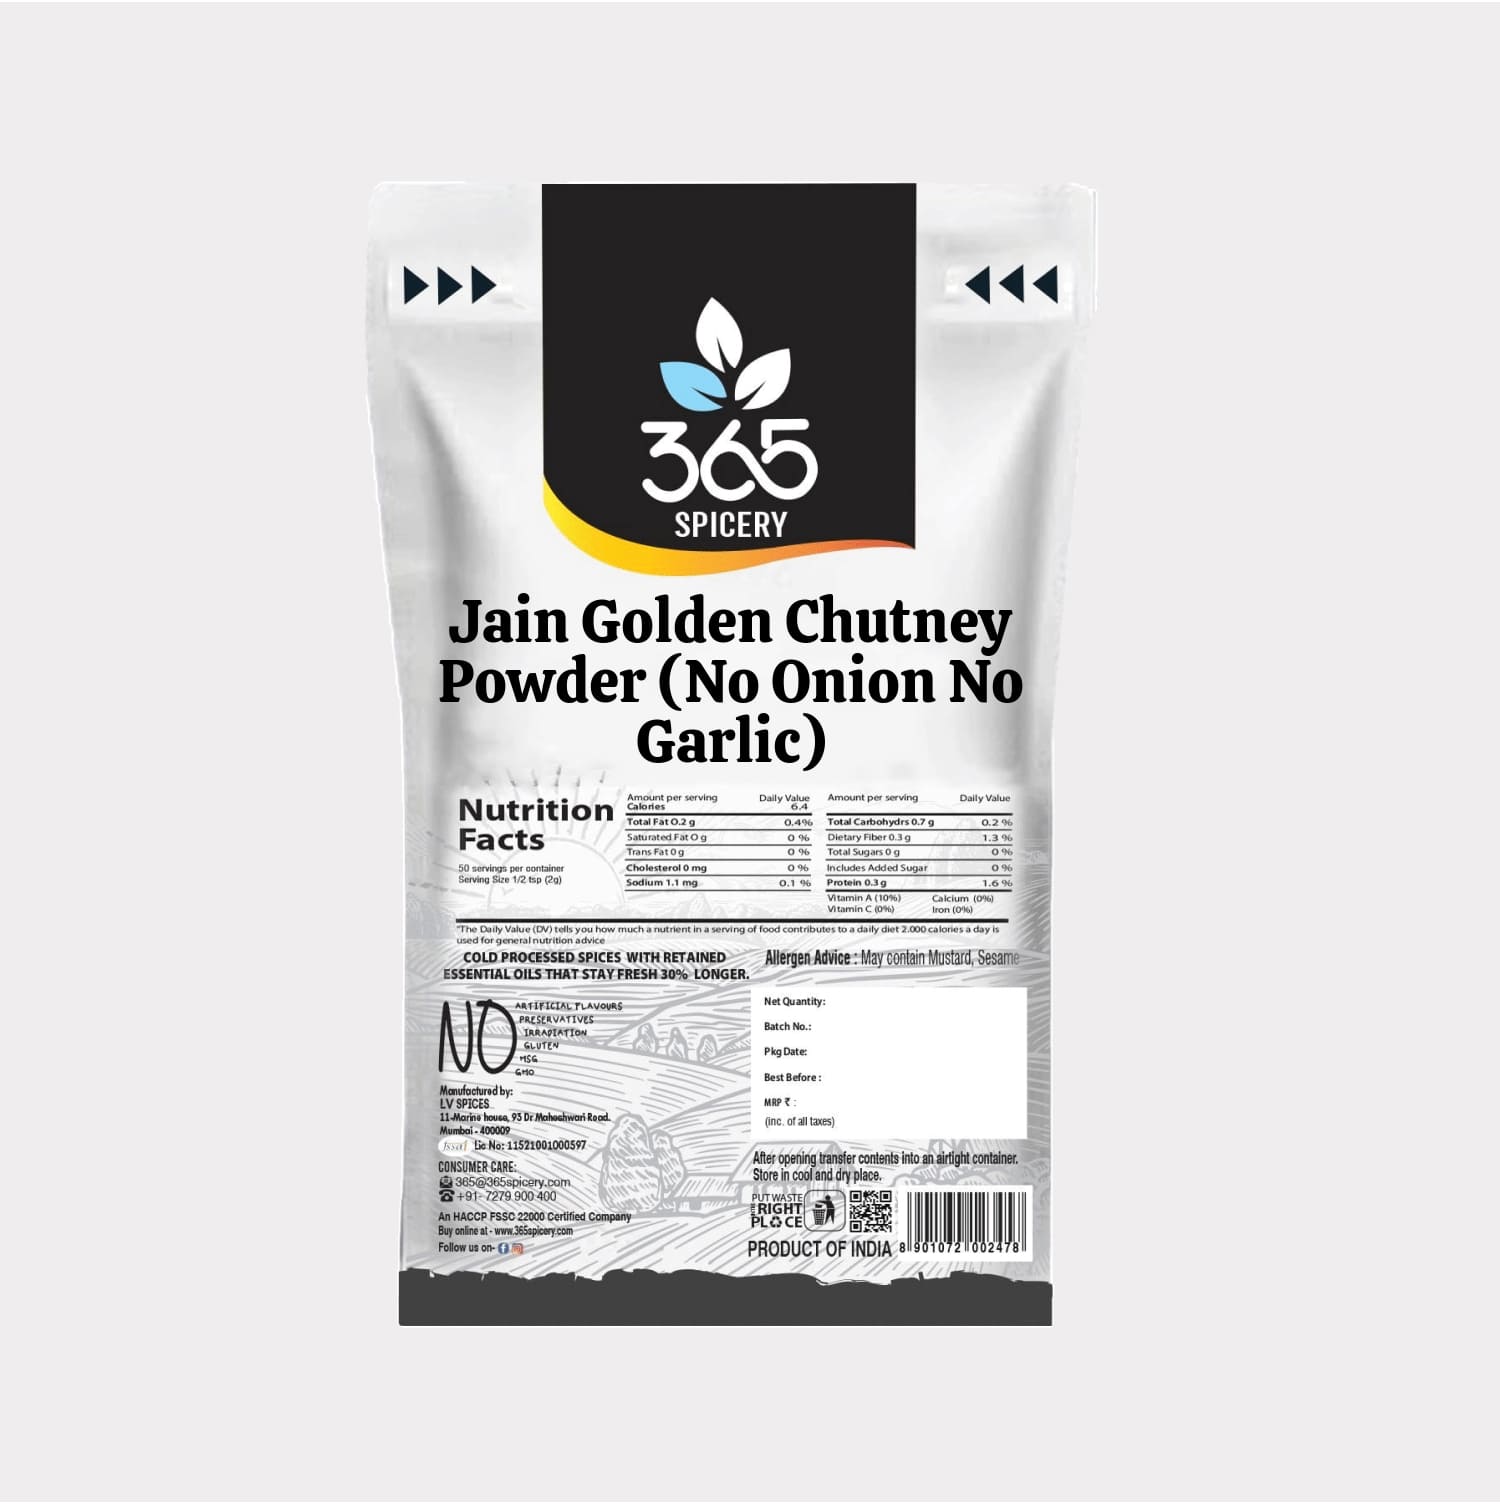 Jain Golden Chutney Powder (No Onion No Garlic)